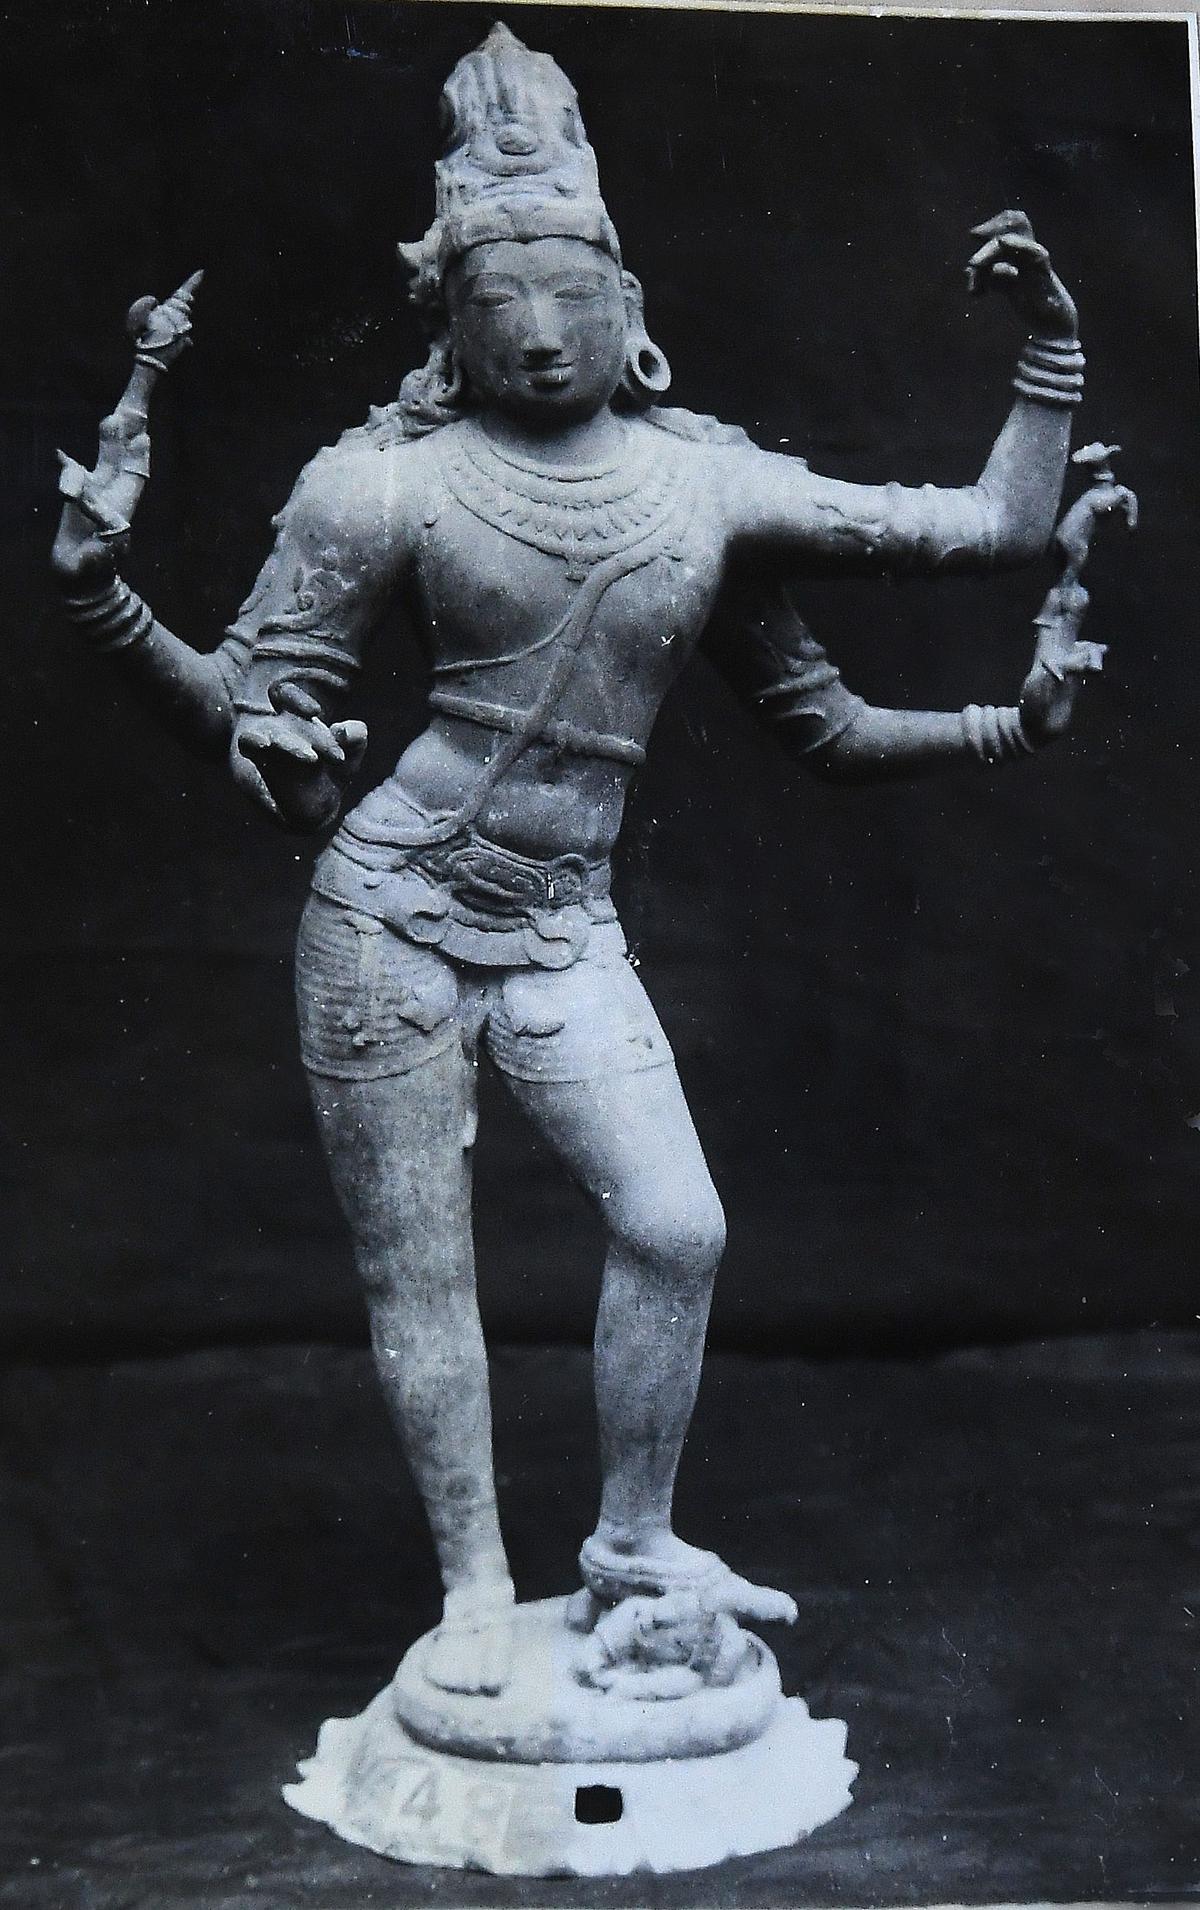 A bronze idol of Tirupurasamhara from the 10th century CE found at Chidambaram Thillai Nataraja temple in 1976.